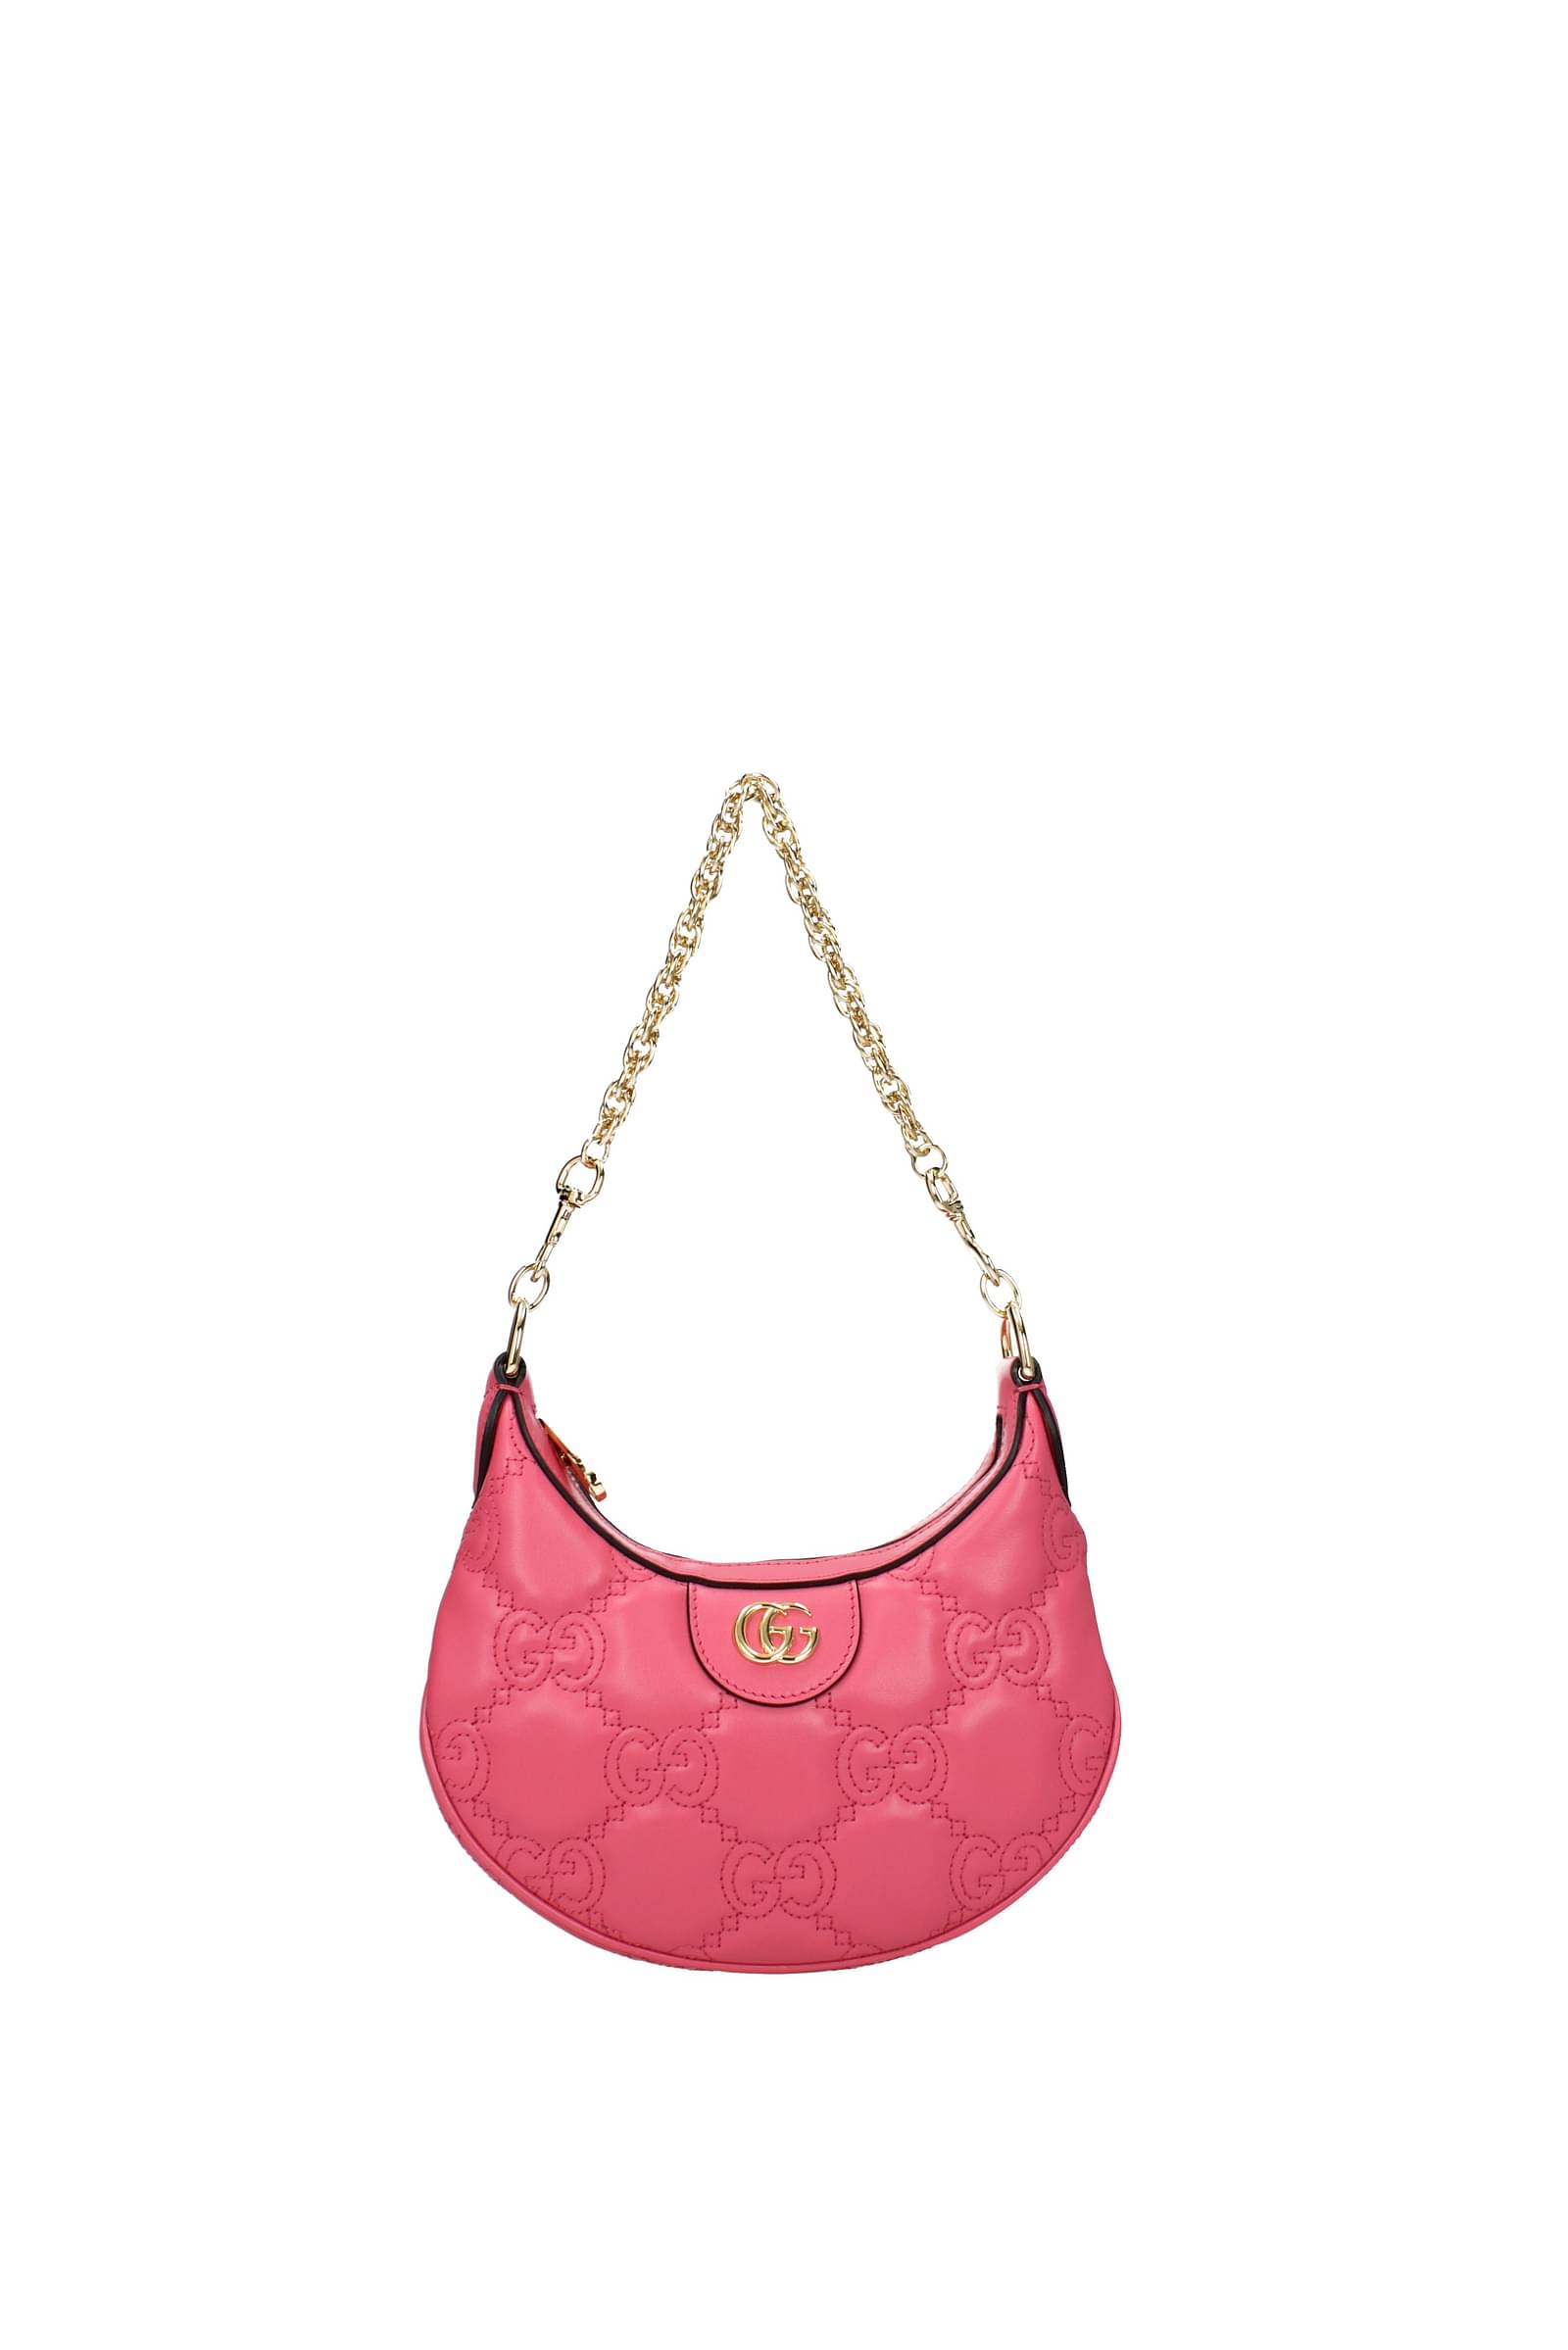 Michael Kors Gucci Soho Handbags Outlet | semashow.com